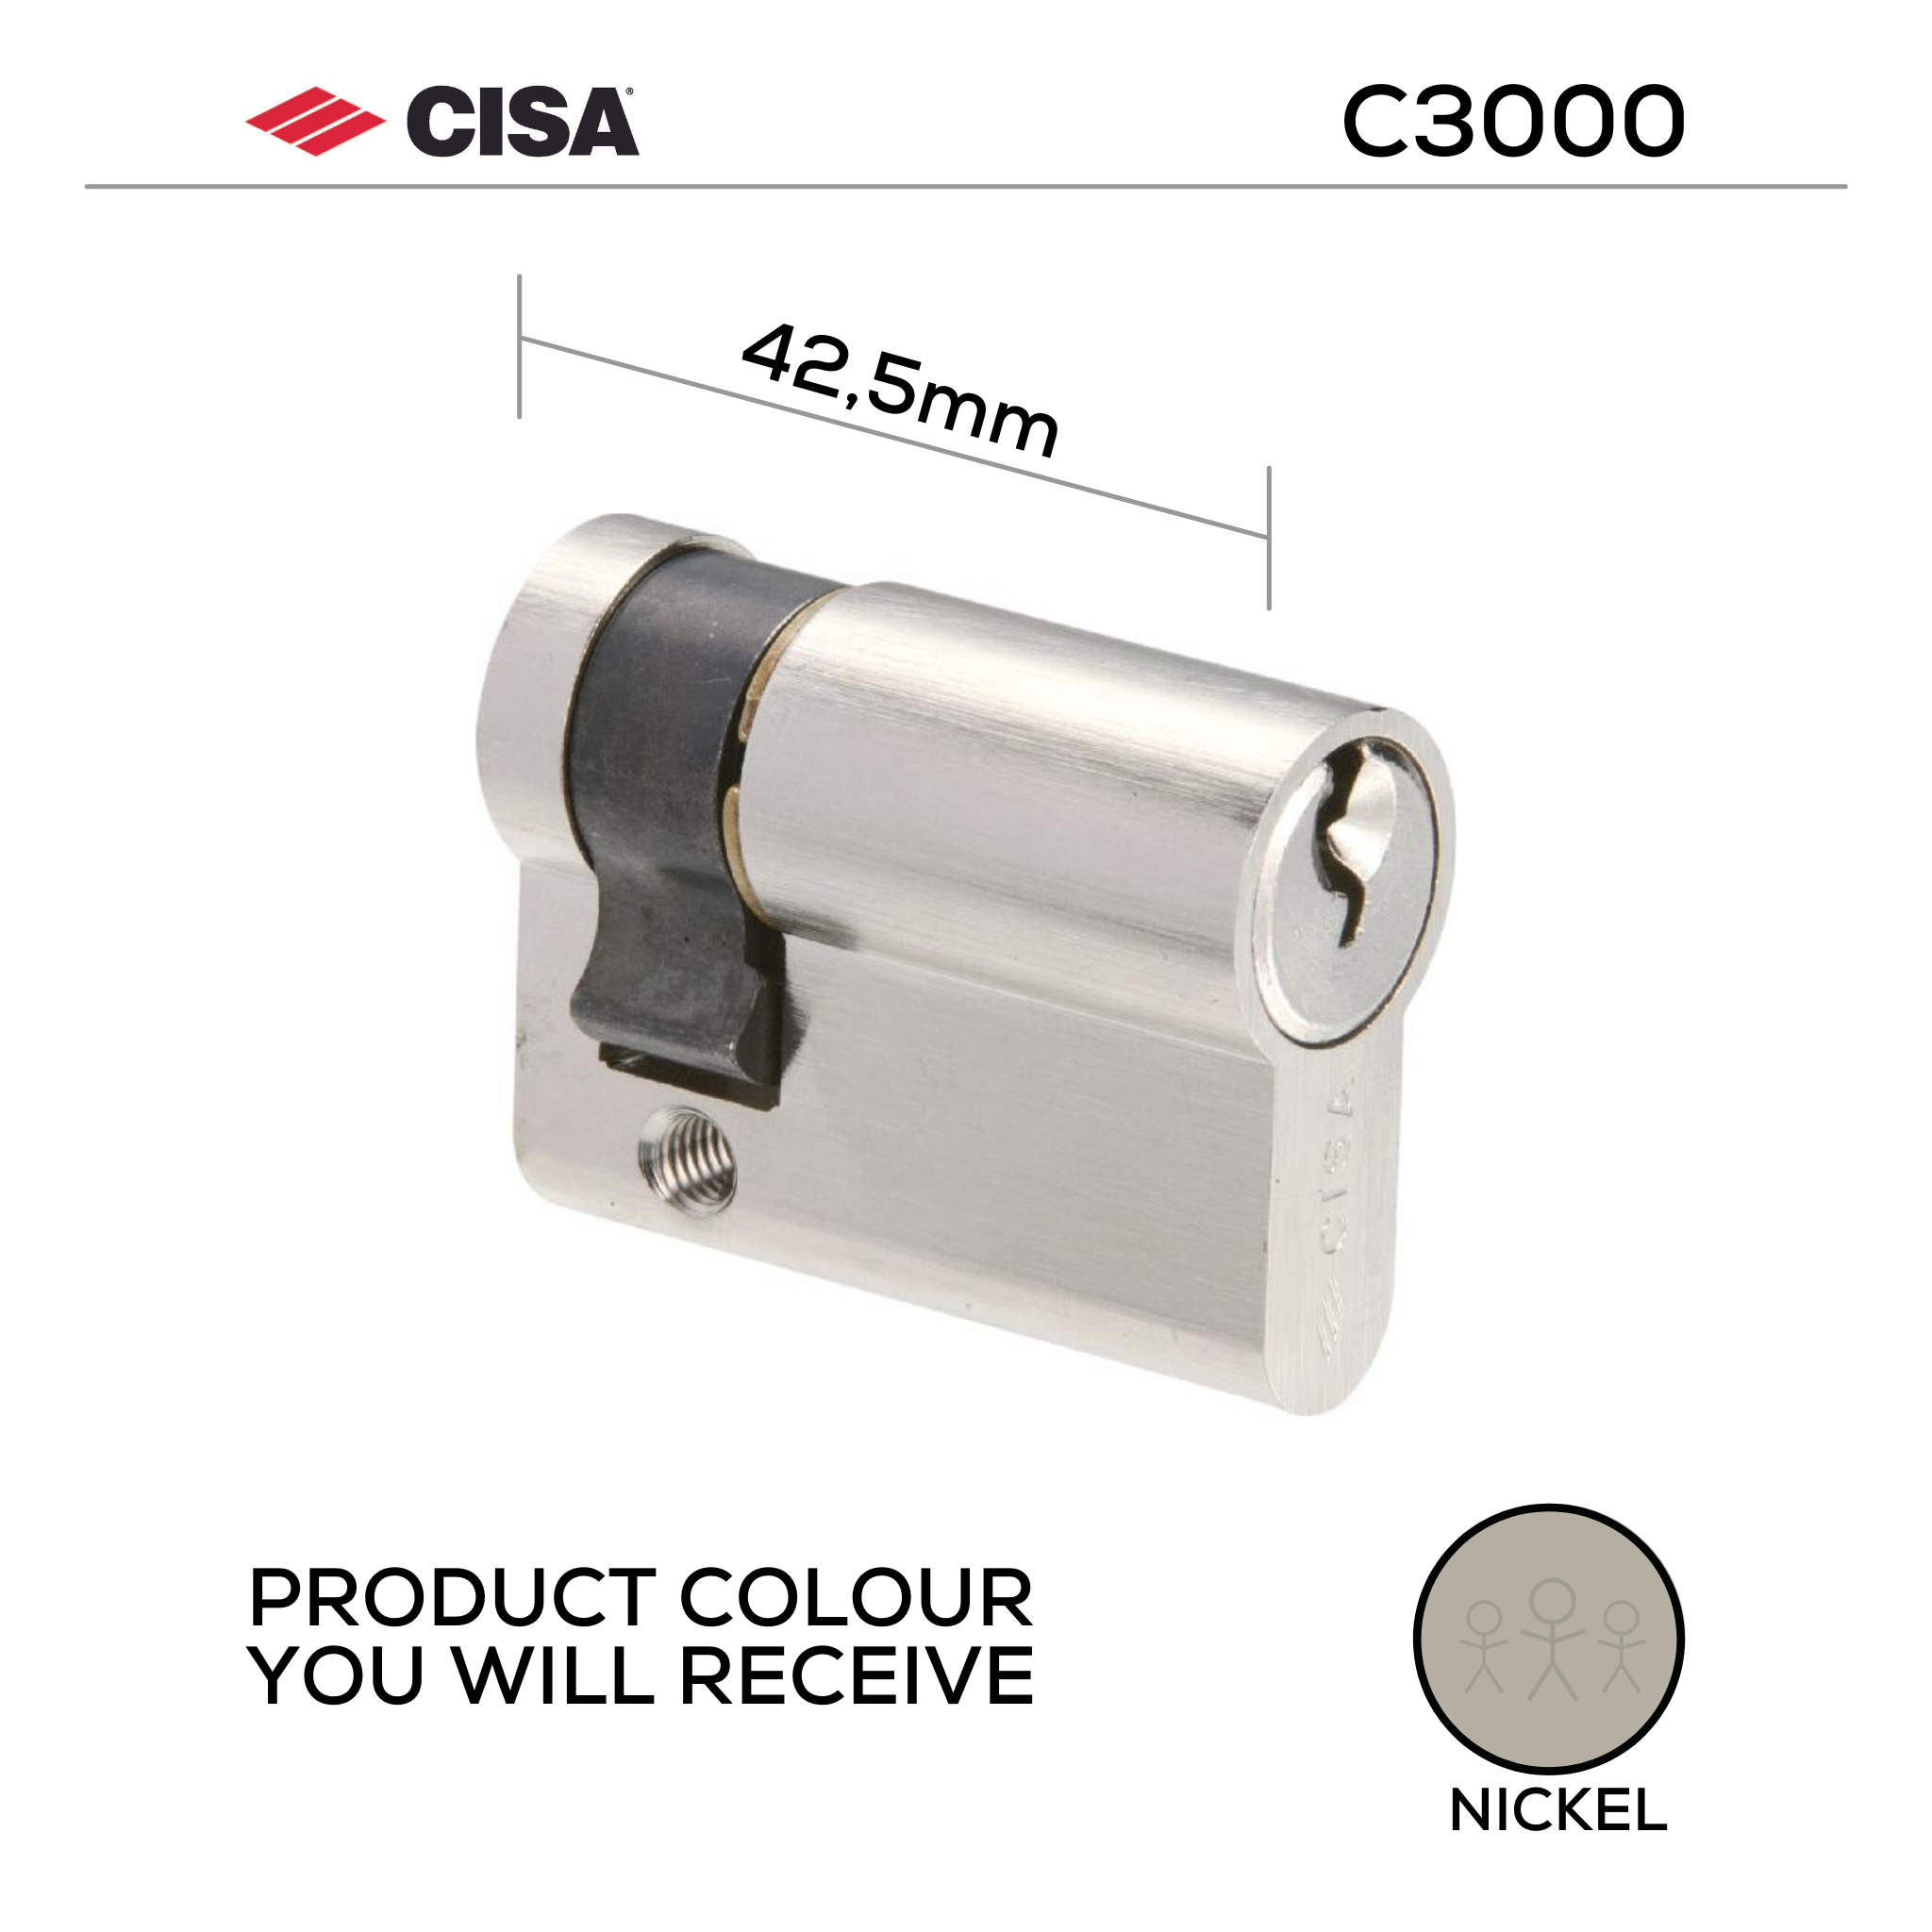 0N314-07-12-KD, 42.5mm - 32.5/10, Half (Single Cylinder), C3000, Key, Keyed to Differ (Standard), 3 Keys, 6 Pin, Nickel, CISA